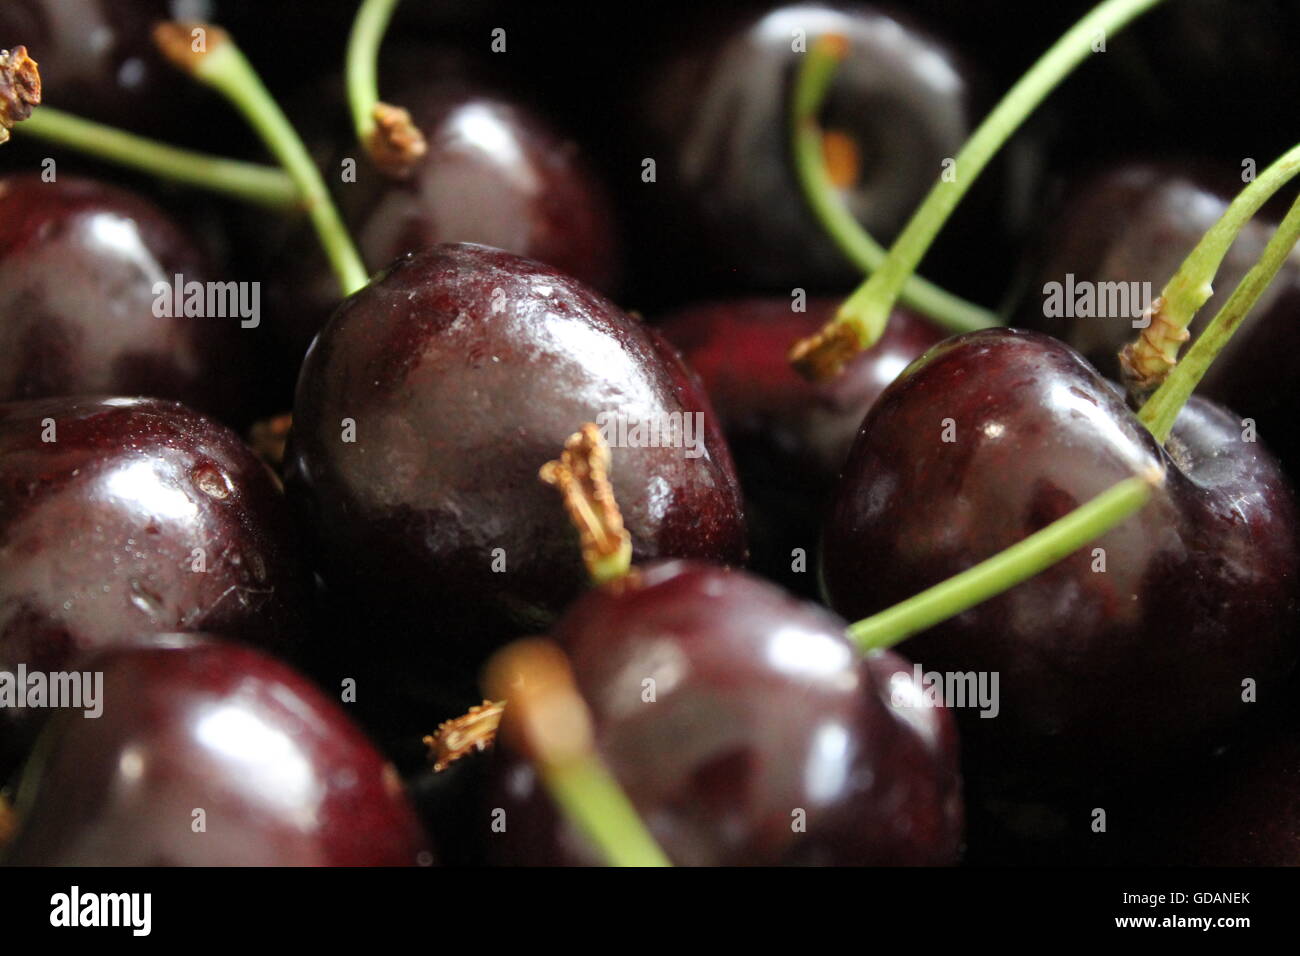 Cherry, cherries, fruit, healthy eating, diet, jam making, preserves, summer, genus prunus, stone fruit, allotment, black forest Stock Photo